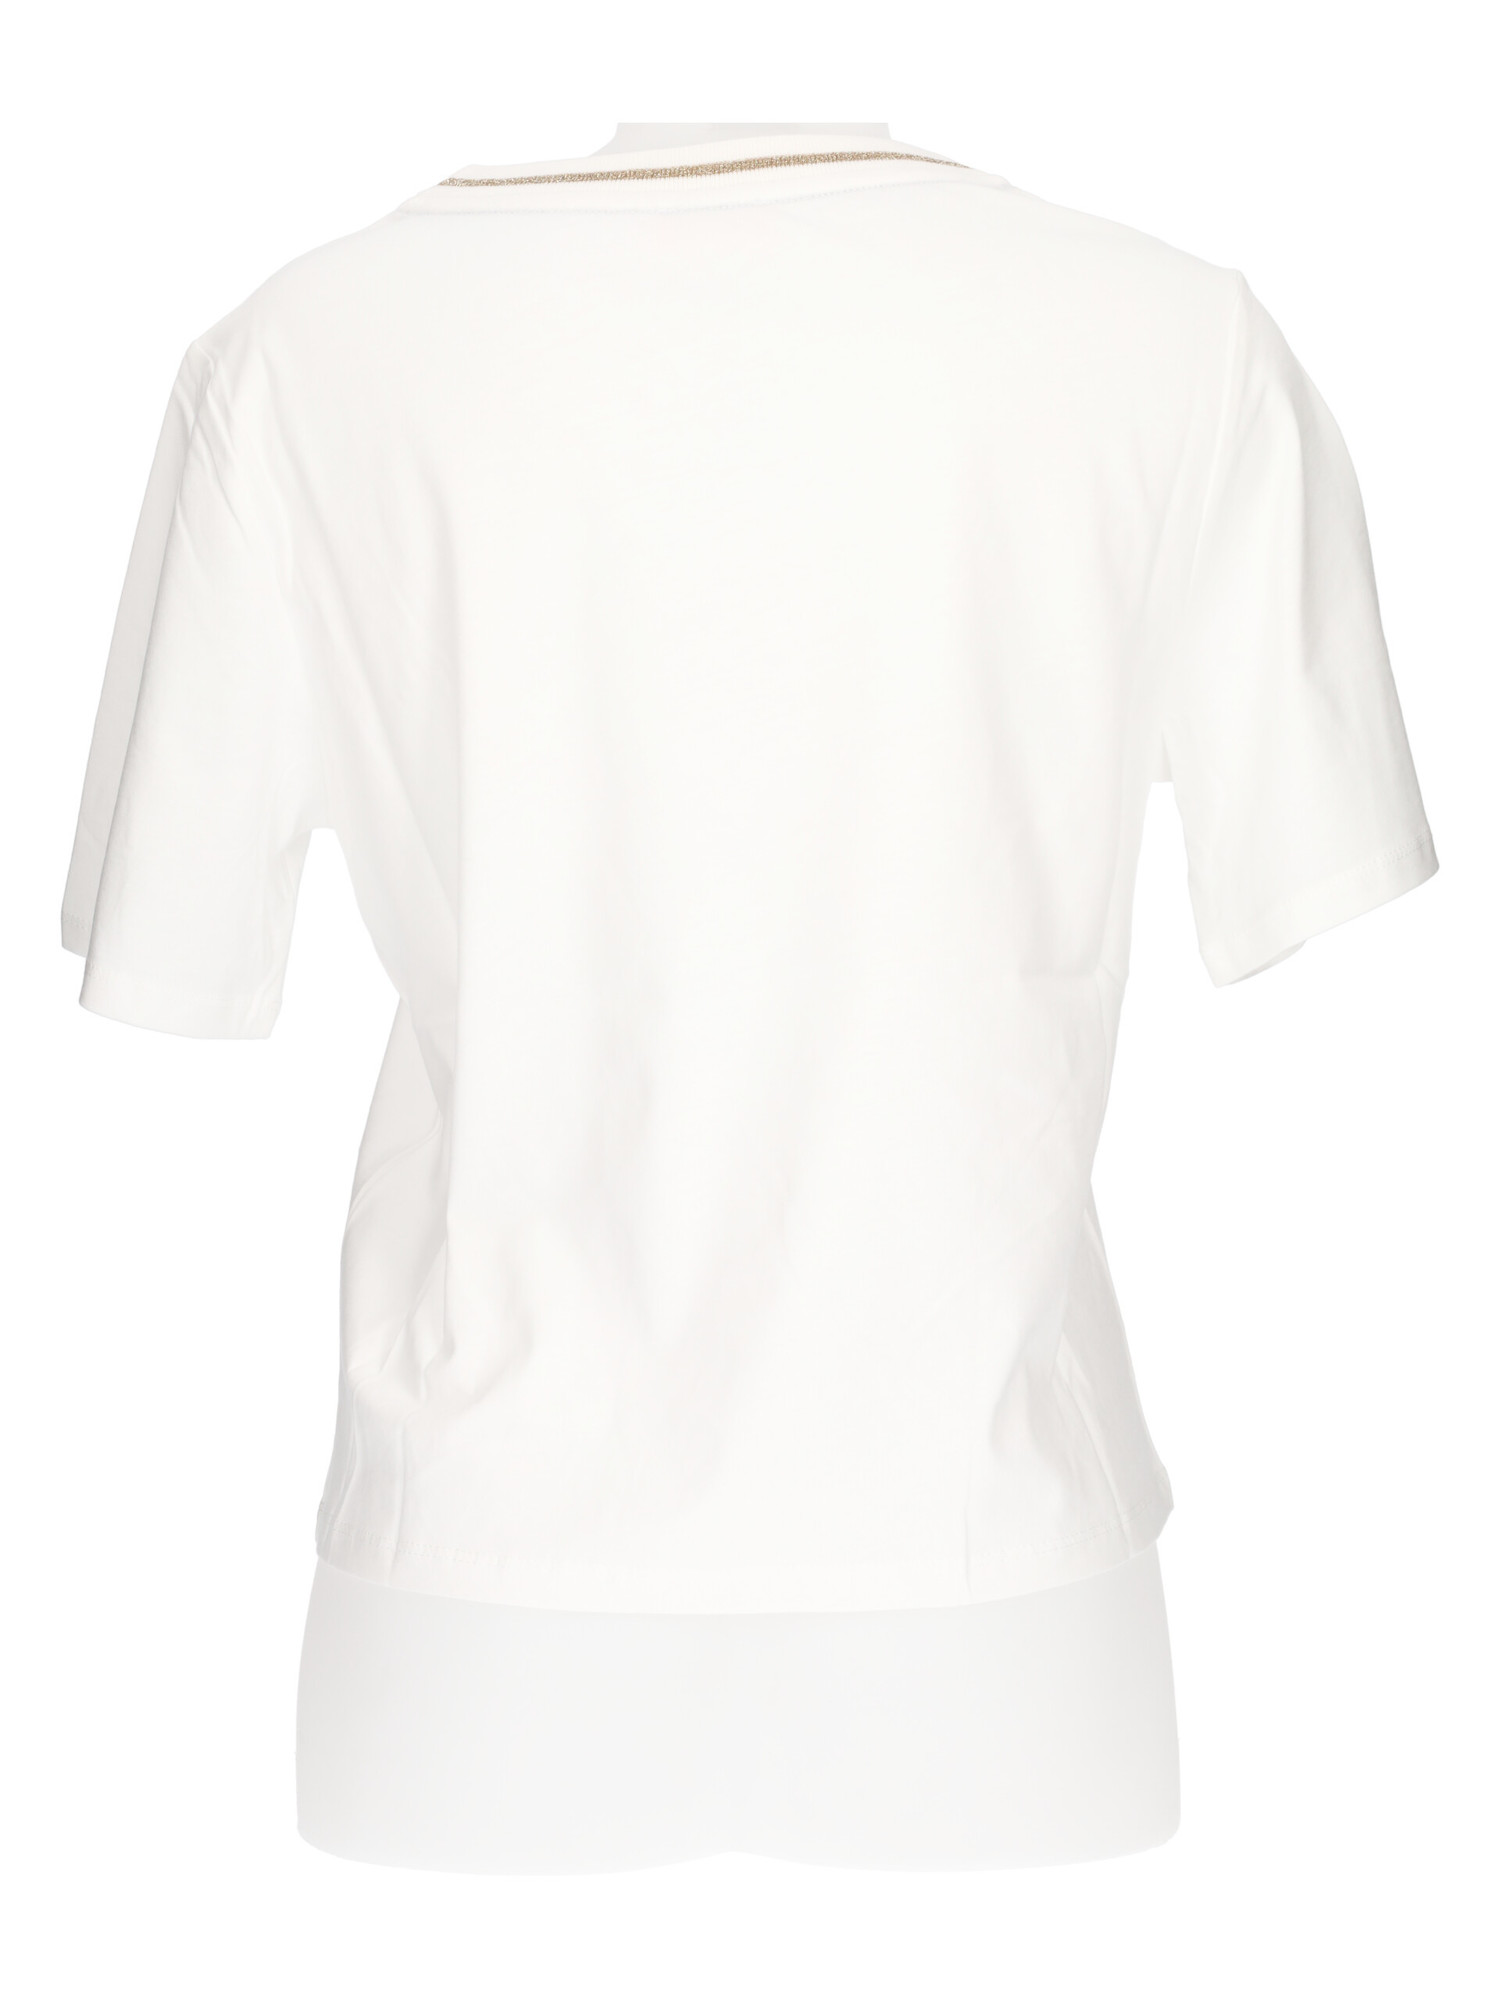 TEE Logo White - Maglietta a maniche corte - Donna – Gobik